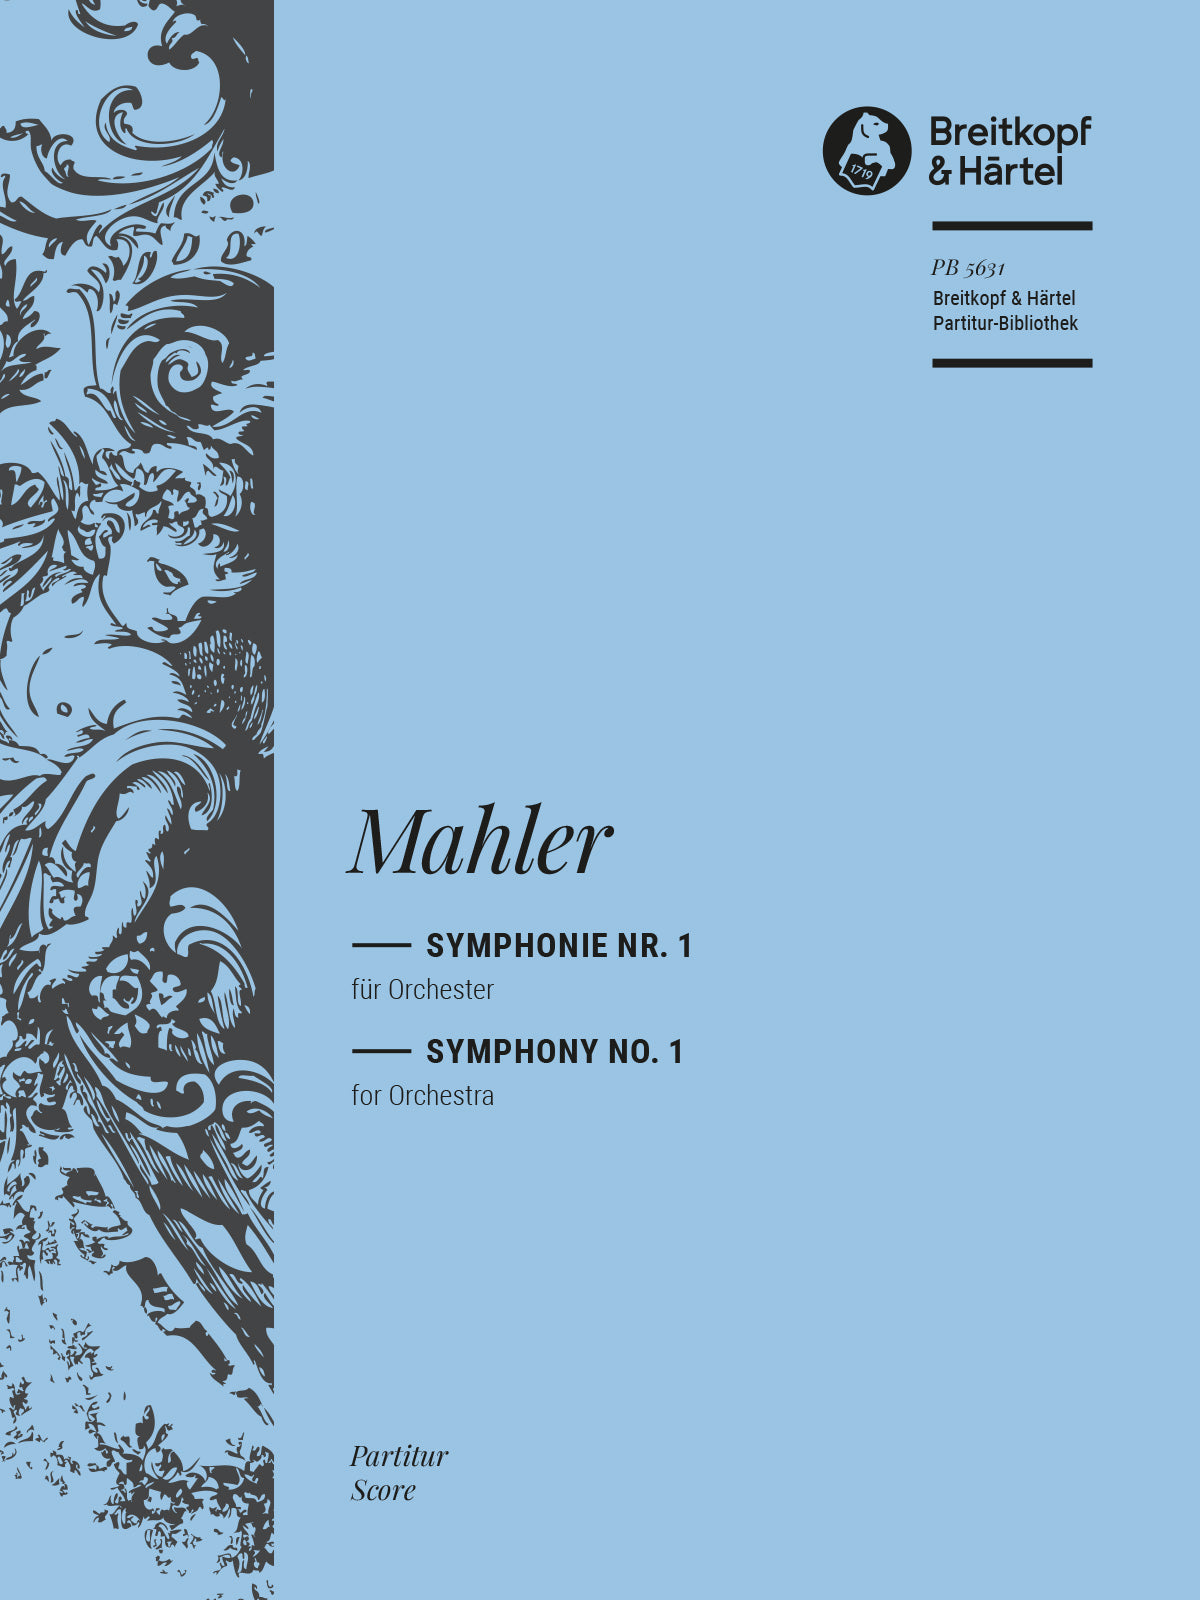 Mahler Symphony No 1 FS